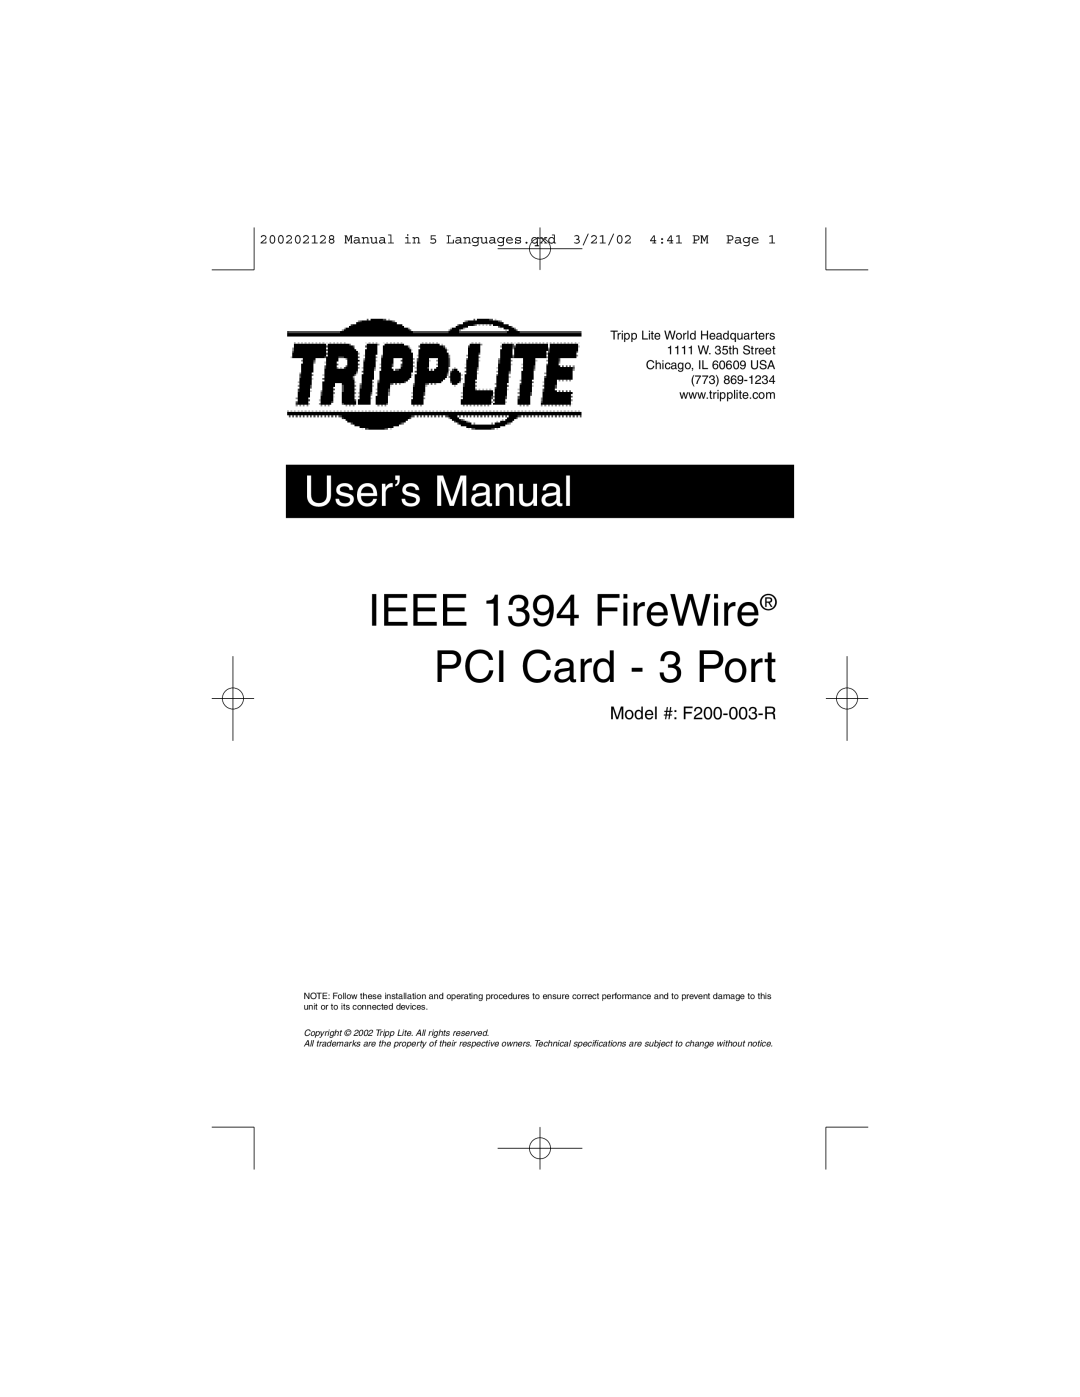 Tripp Lite F200-003-R user manual IEEE 1394 FireWire PCI Card - 3 Port, User’s Manual, Chicago, IL 60609 USA 773 